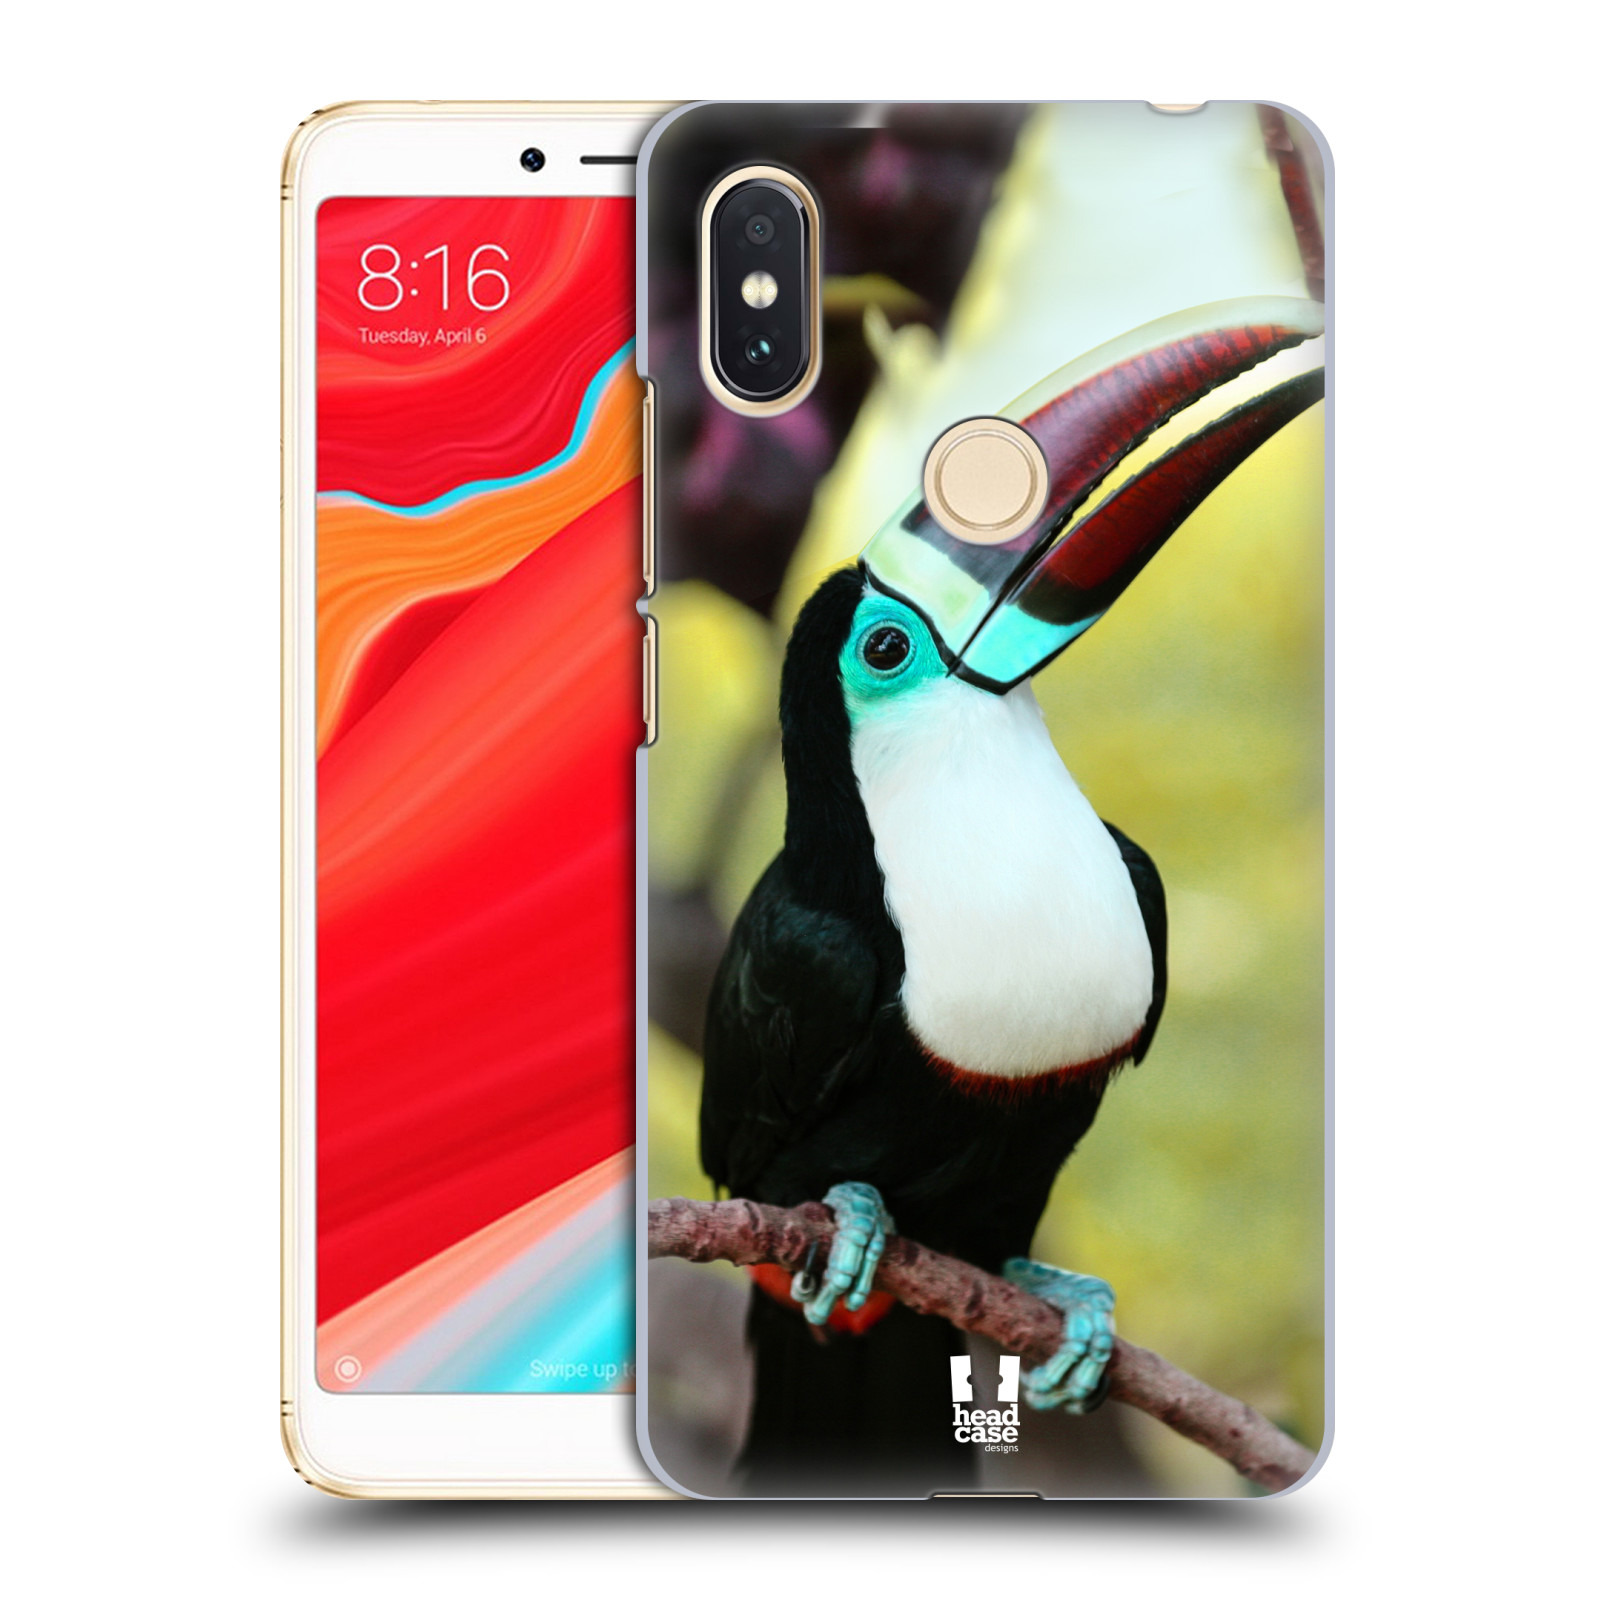 HEAD CASE plastový obal na mobil Xiaomi Redmi S2 vzor slavná zvířata foto tukan